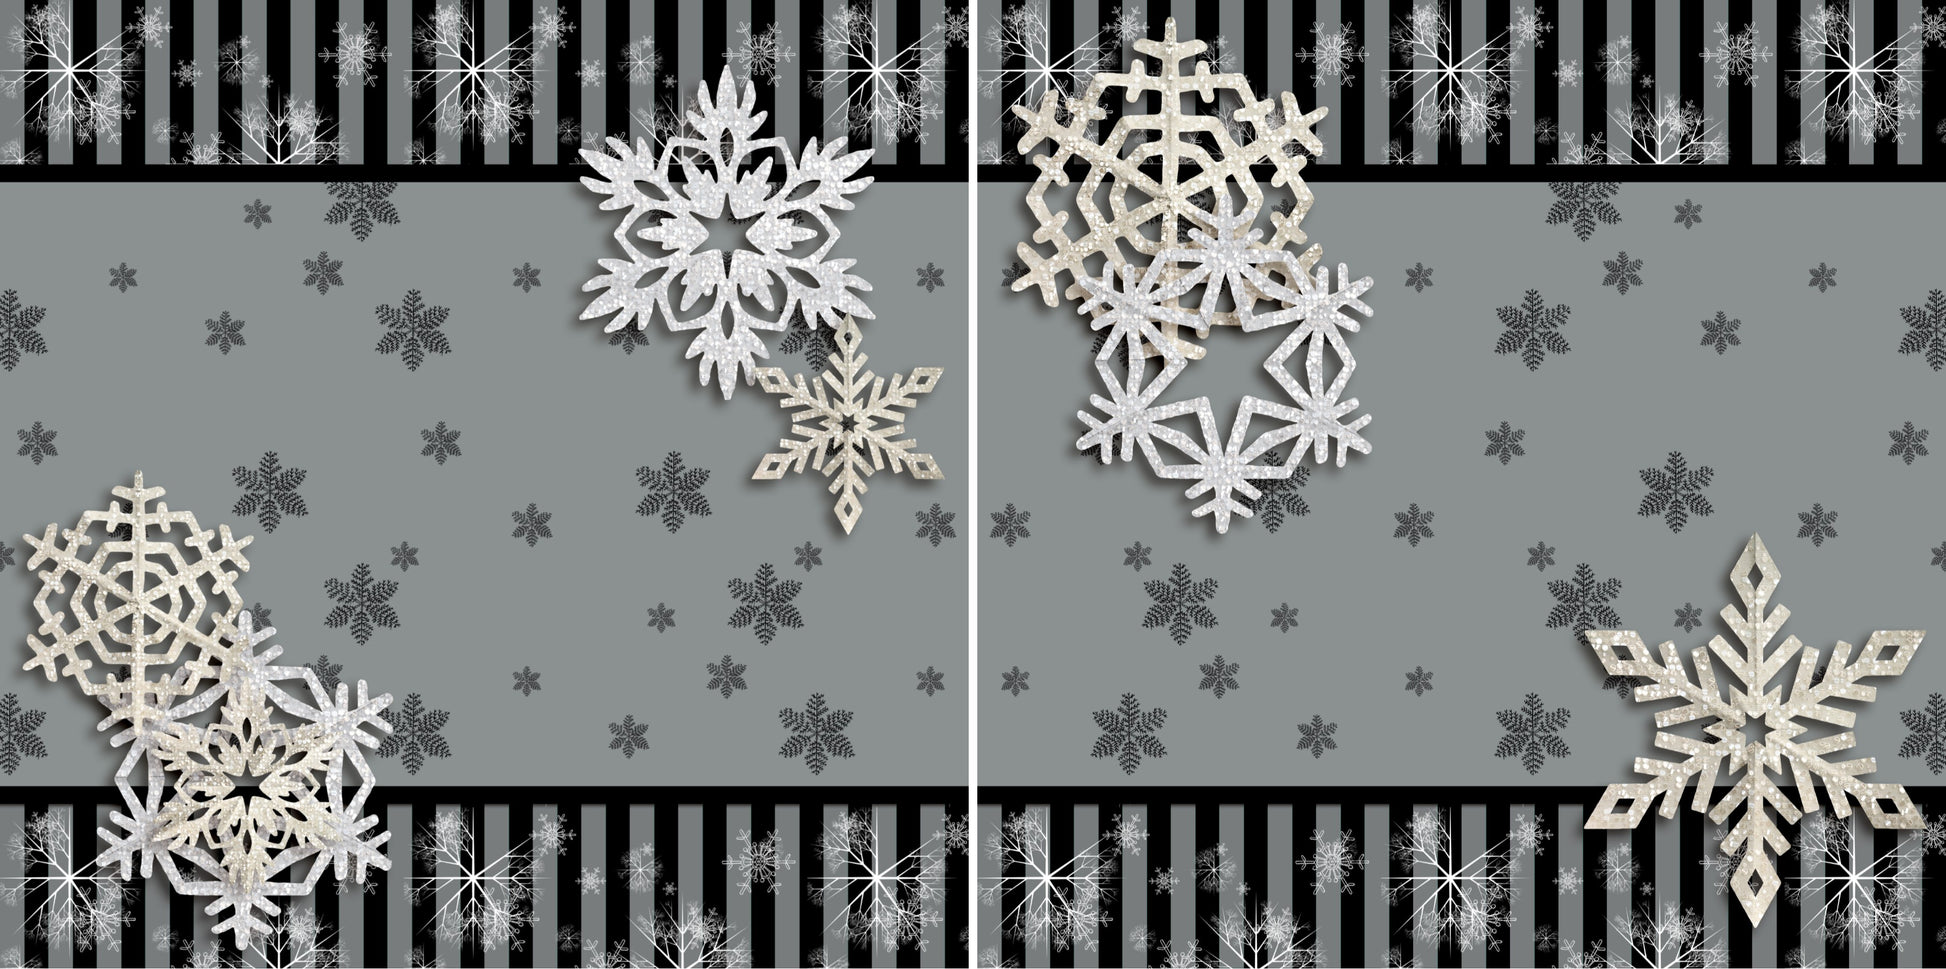 Silver Snowflakes NPM - 3587 - EZscrapbooks Scrapbook Layouts Christmas, Winter